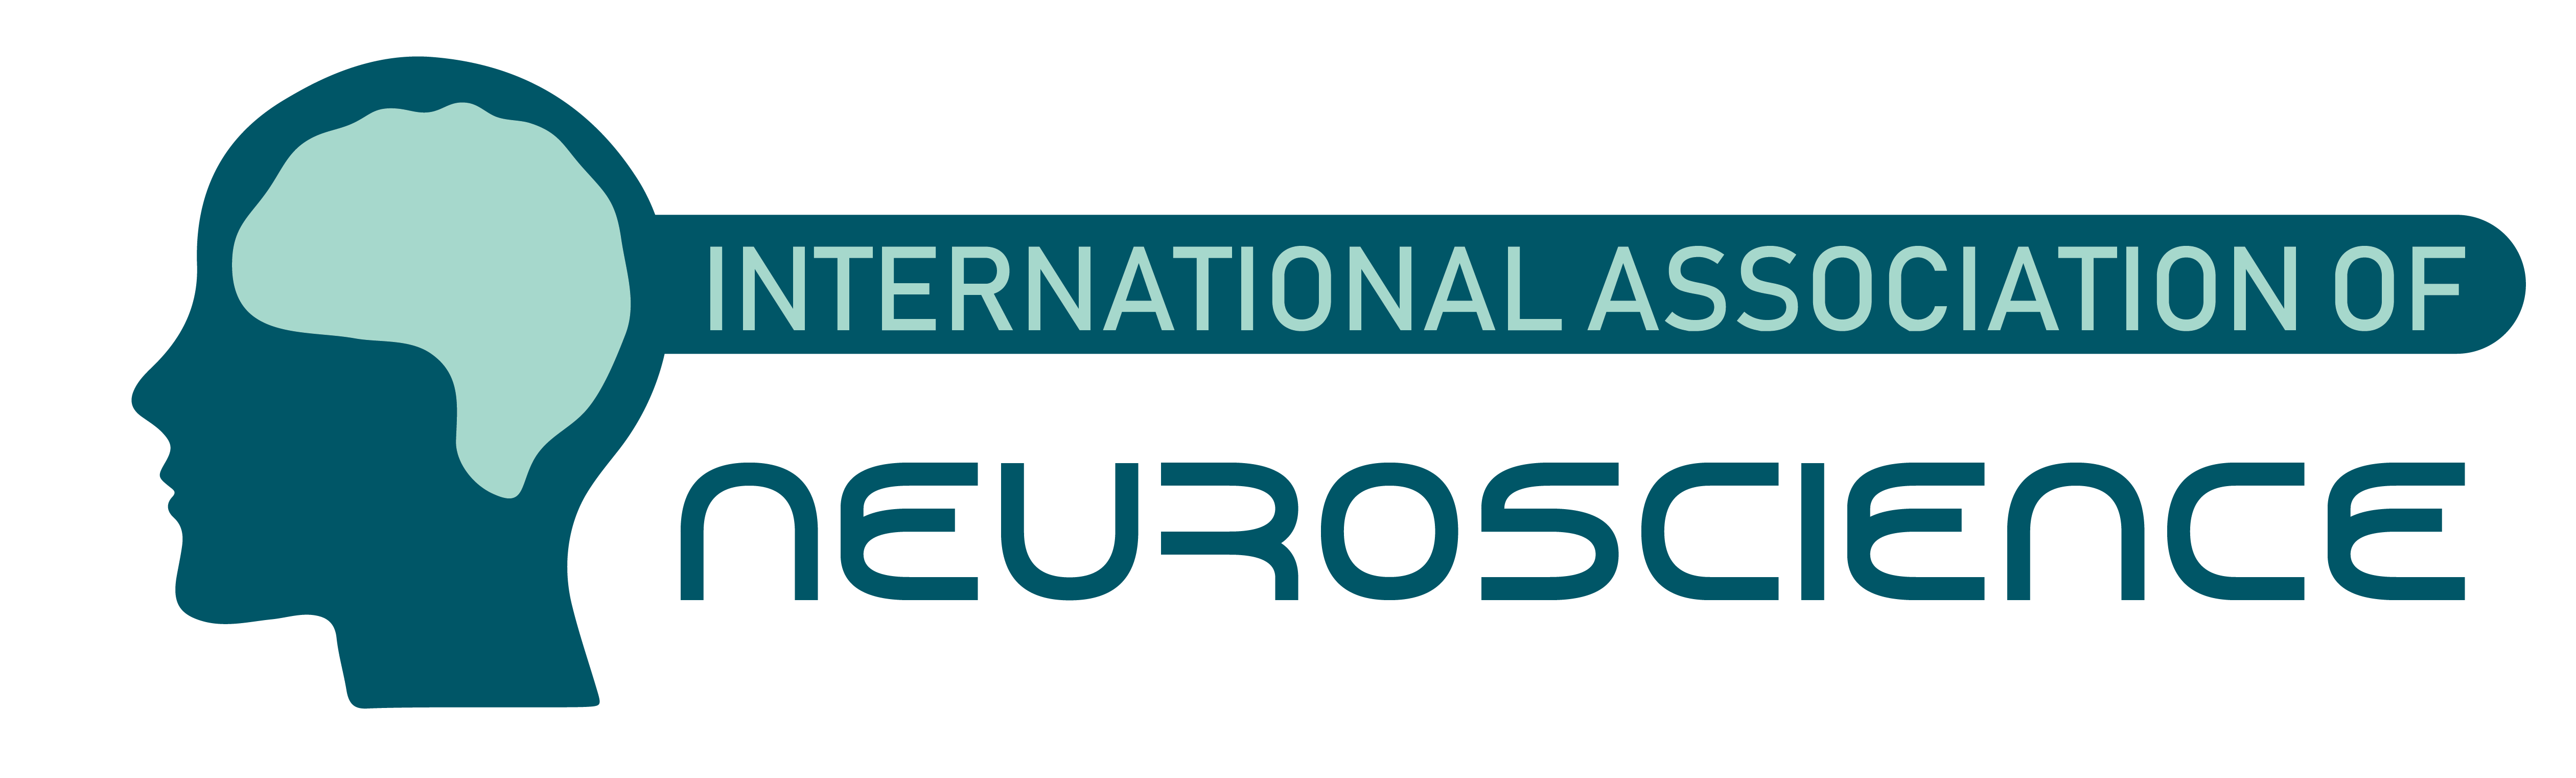 International association of Neuroscience (IAN)